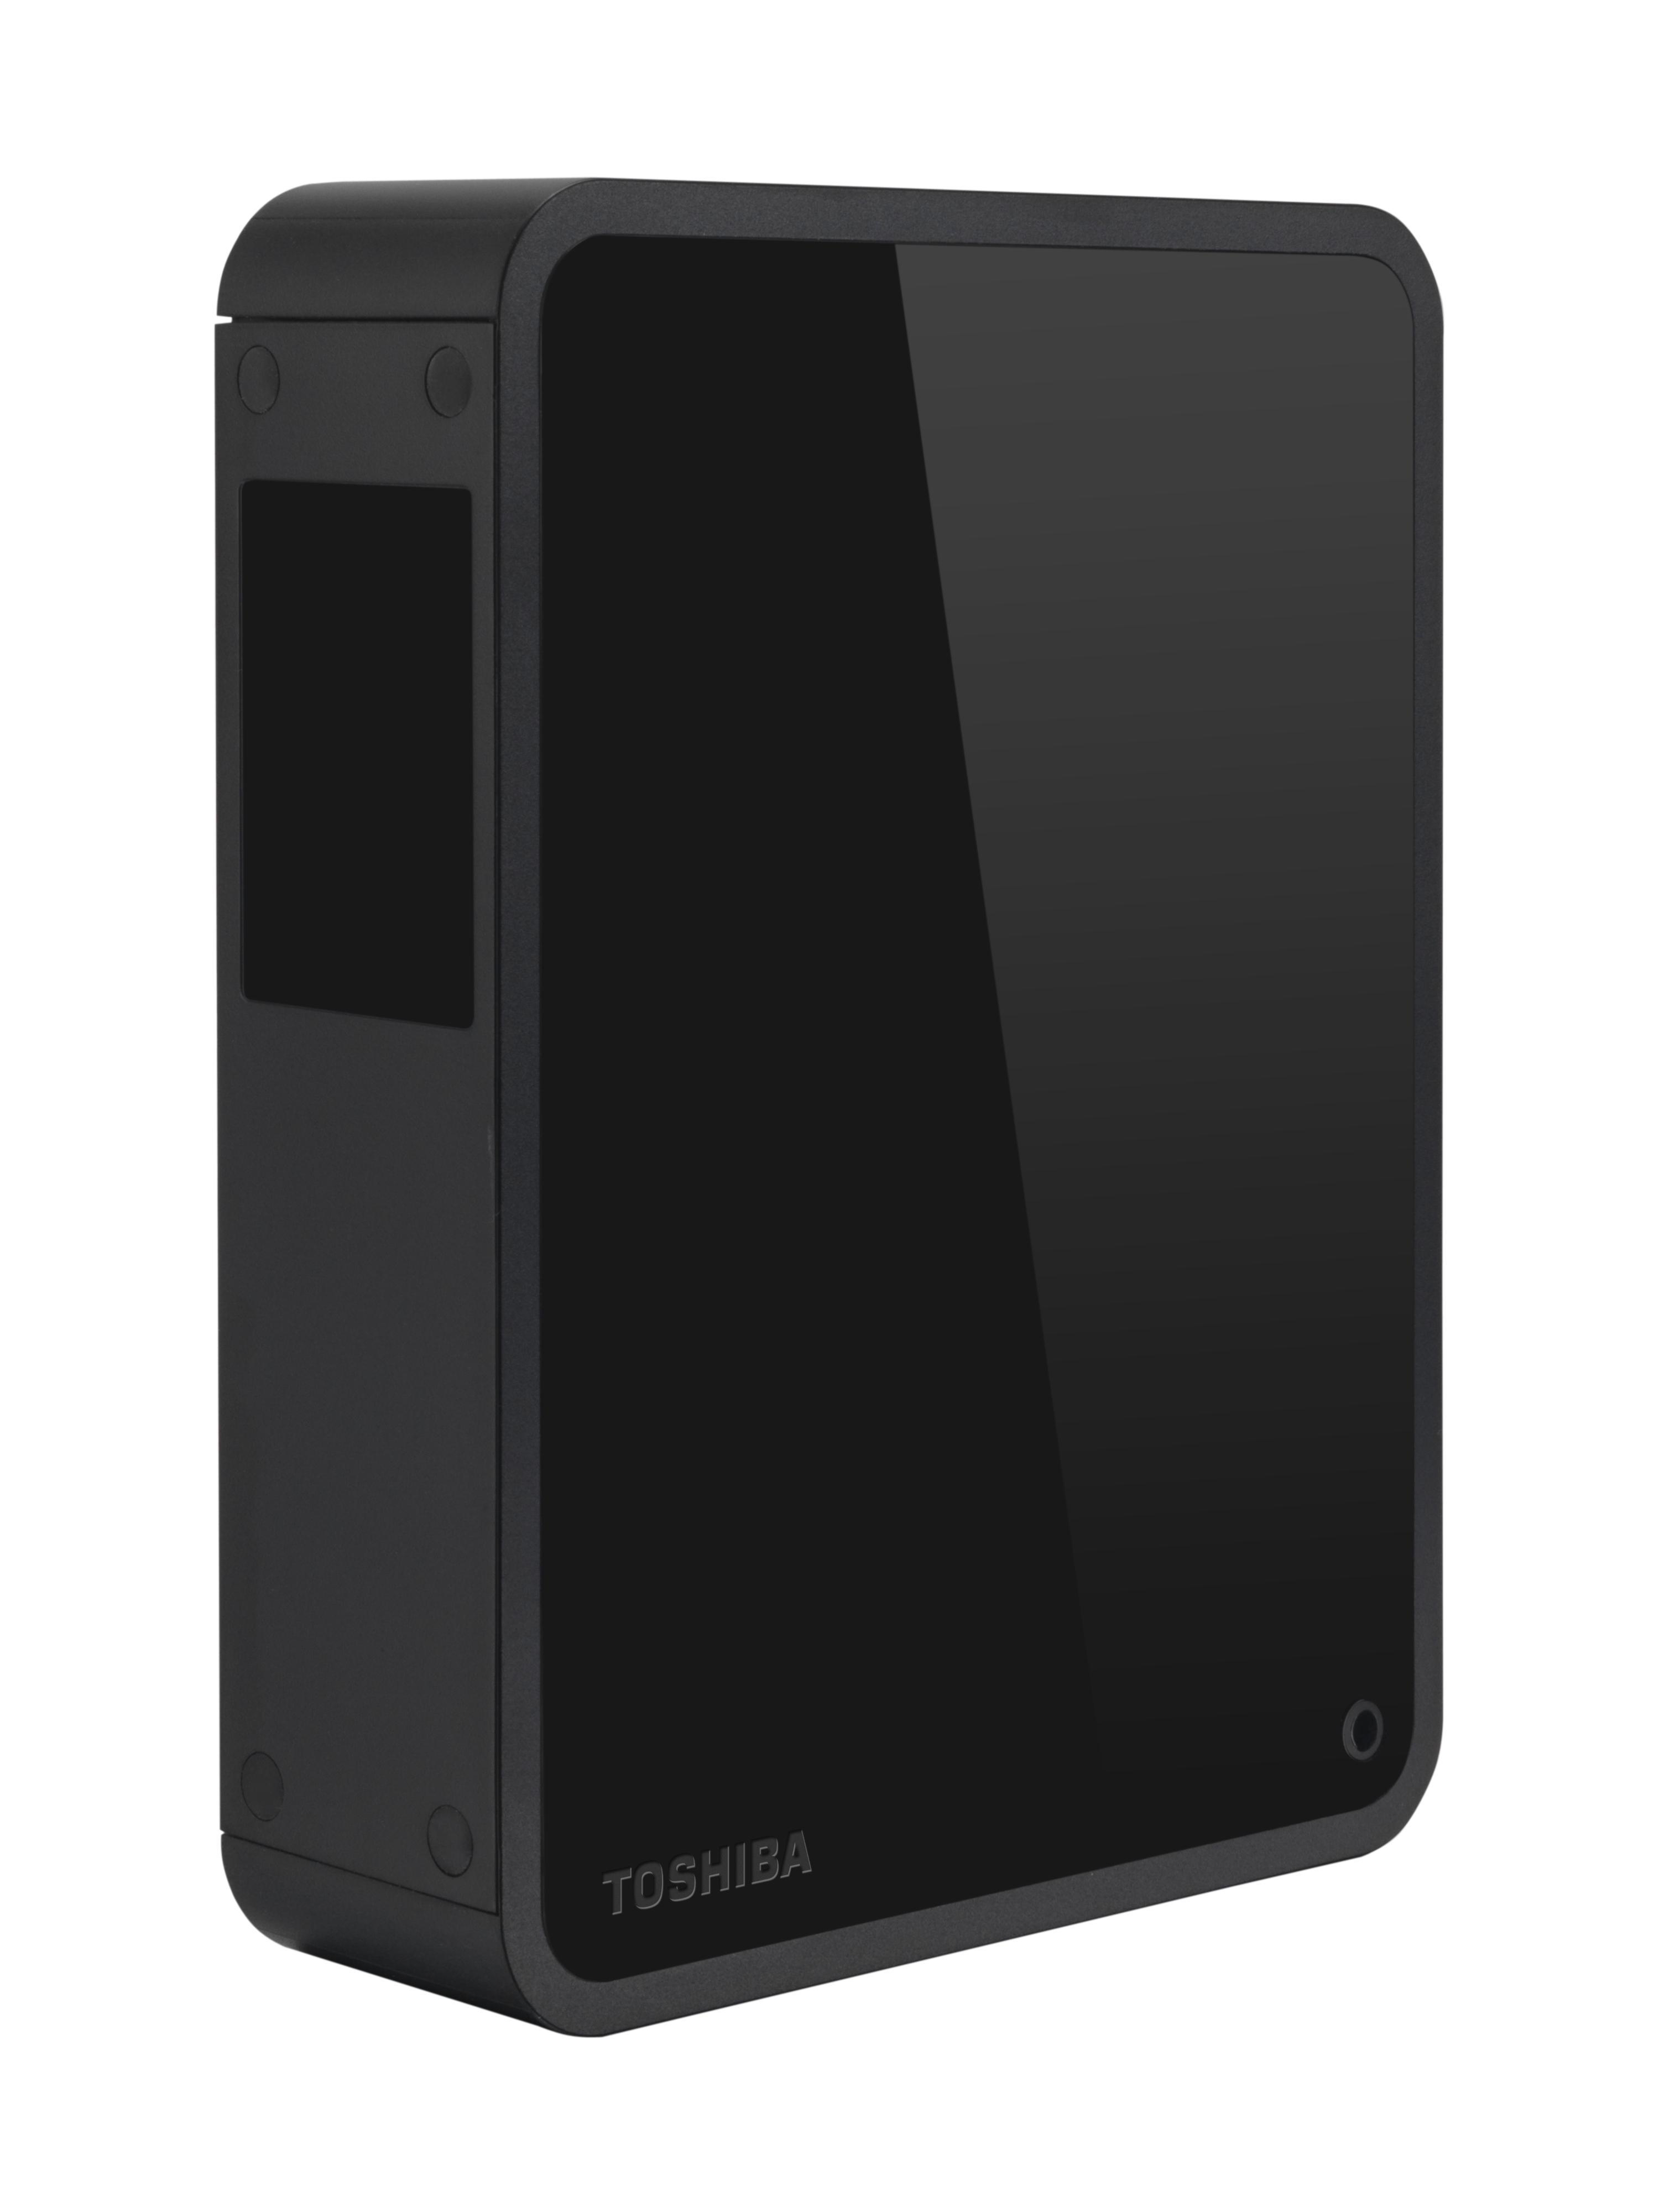 TOSHIBA Canvio for extern, Desktop TB 6 Zoll, Festplatte, 3,5 HDD, Schwarz